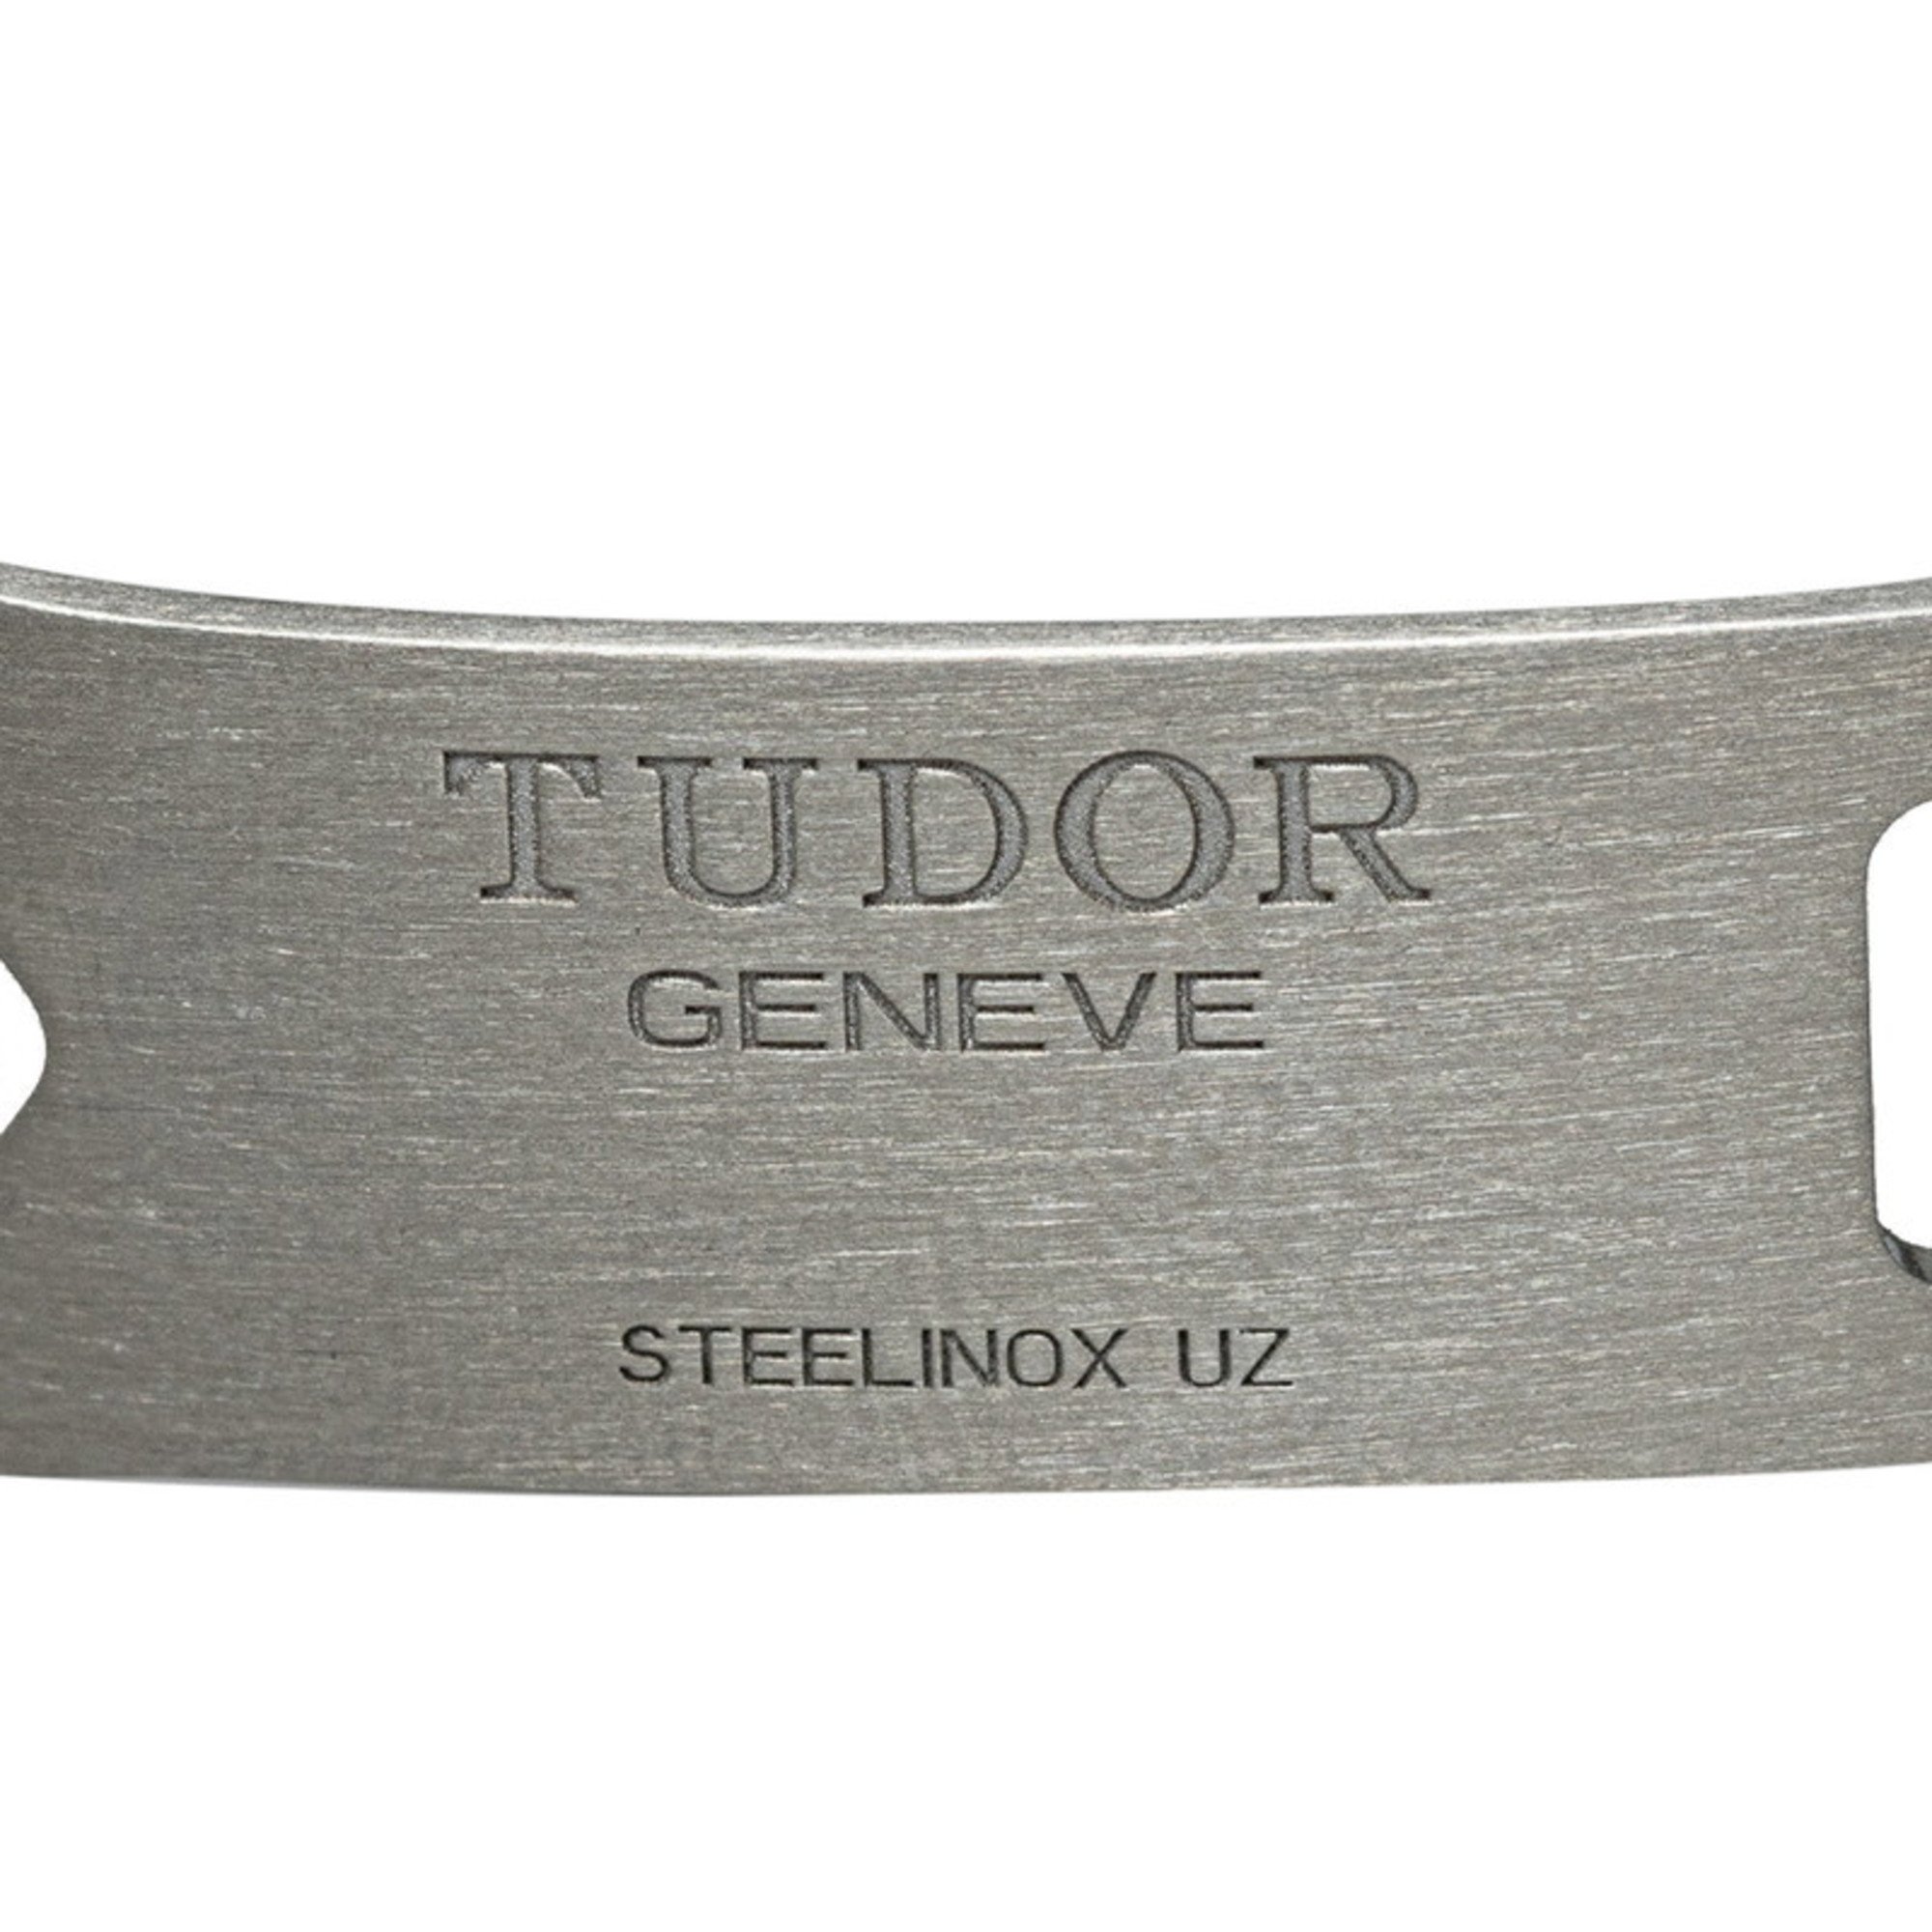 Tudor Ranger Watch 79950 Automatic Black Dial Stainless Steel Men's TUDOR